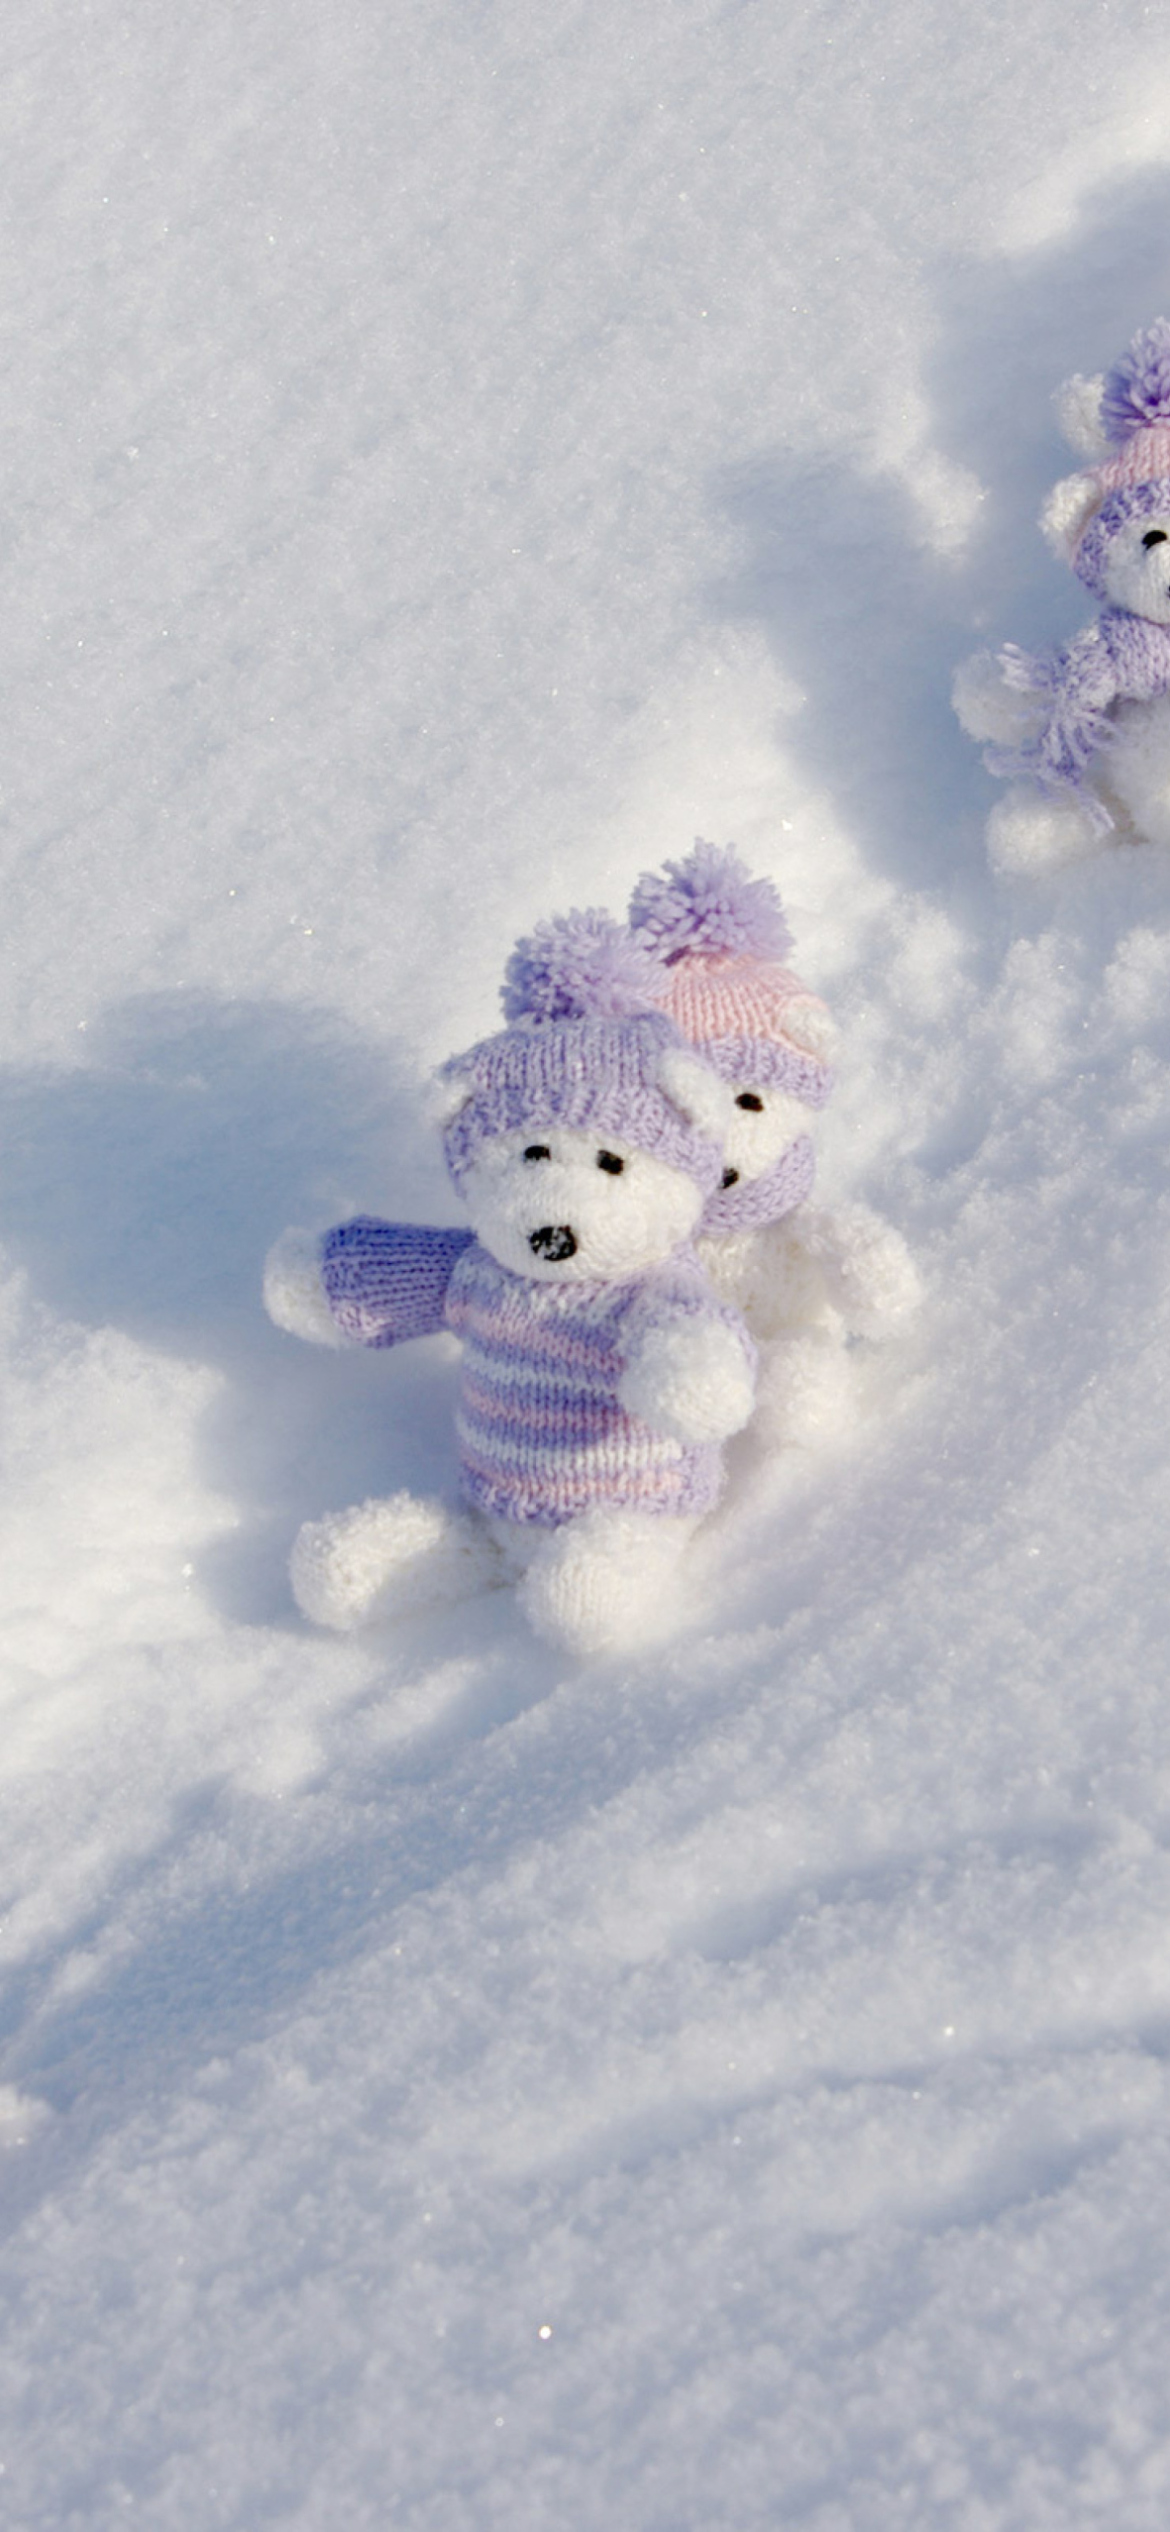 White Teddy Bears Snow Game wallpaper 1170x2532